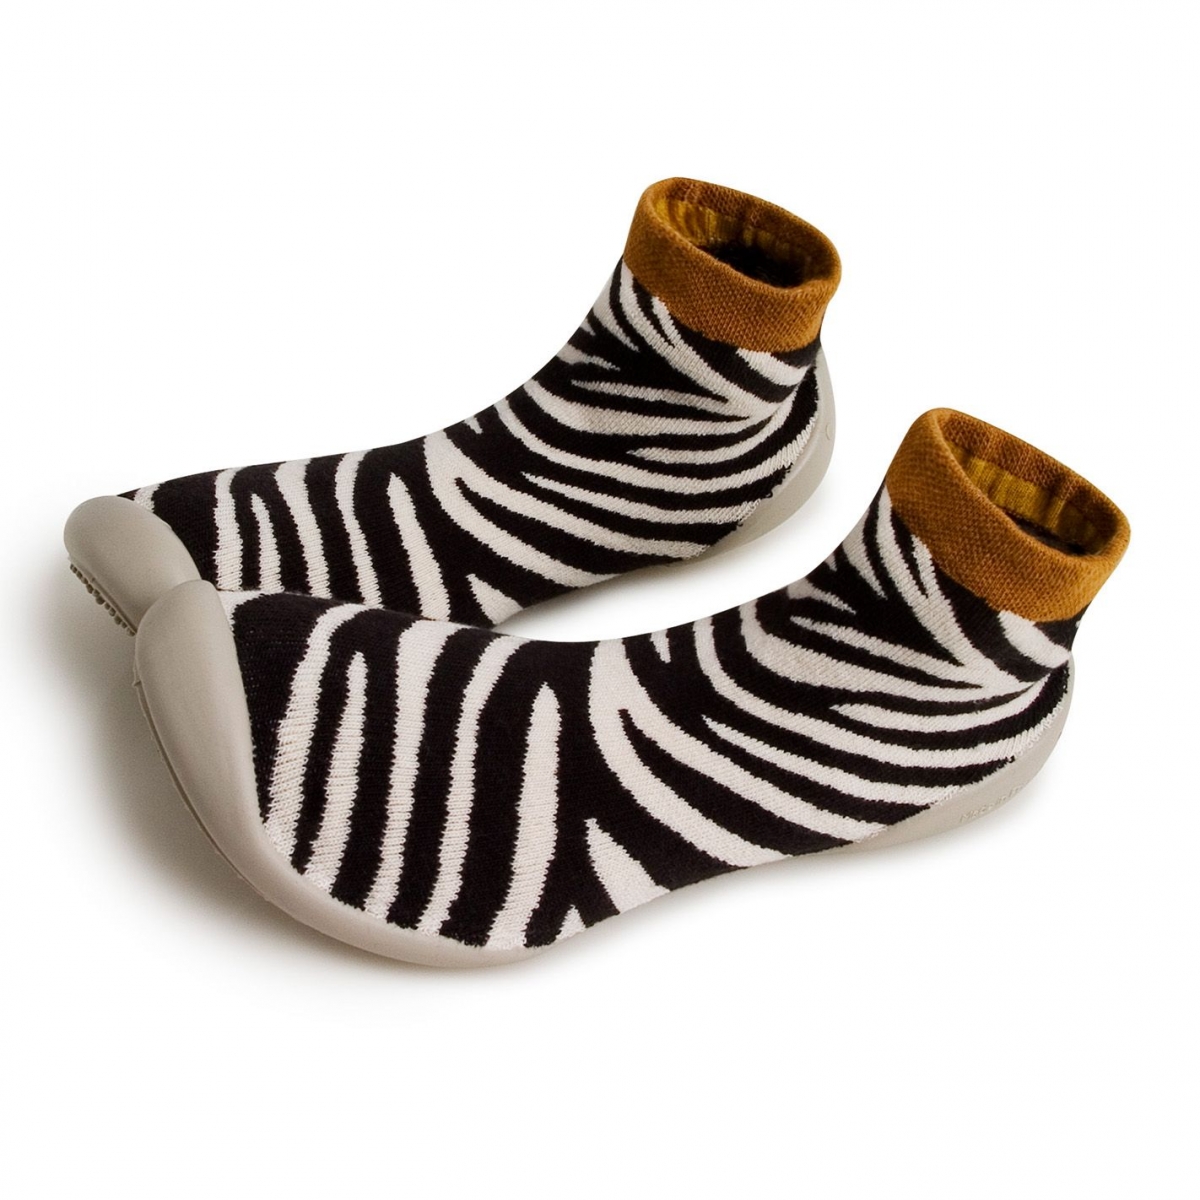 Collégien Slippers socks Zebra 955F00F 